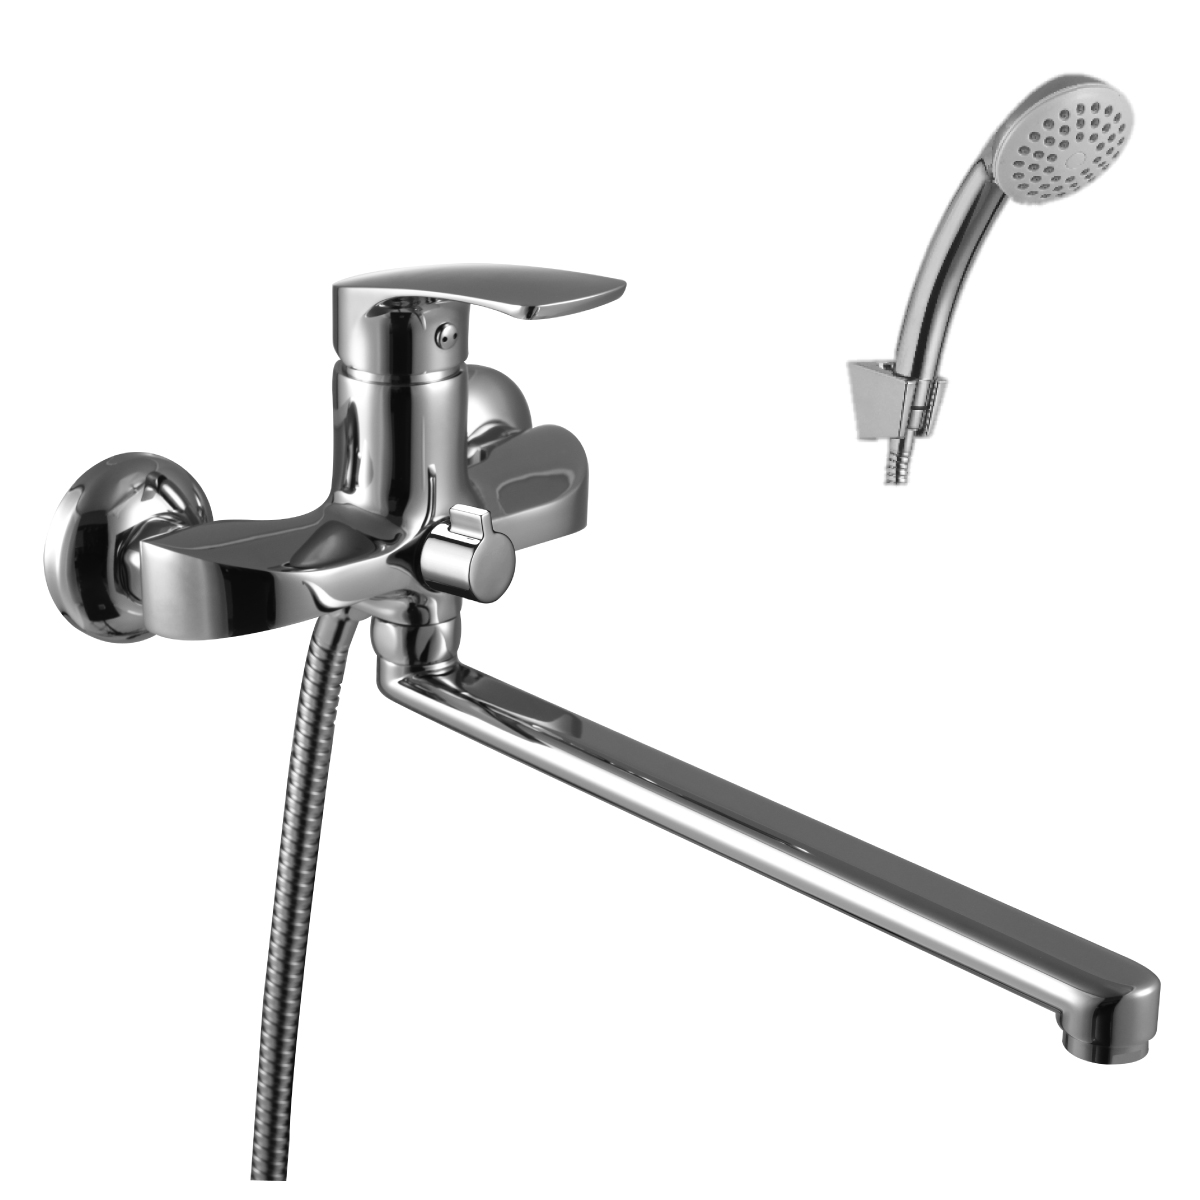 LM1751C Washbasin/bath faucet
with 300 mm flat swivel spout